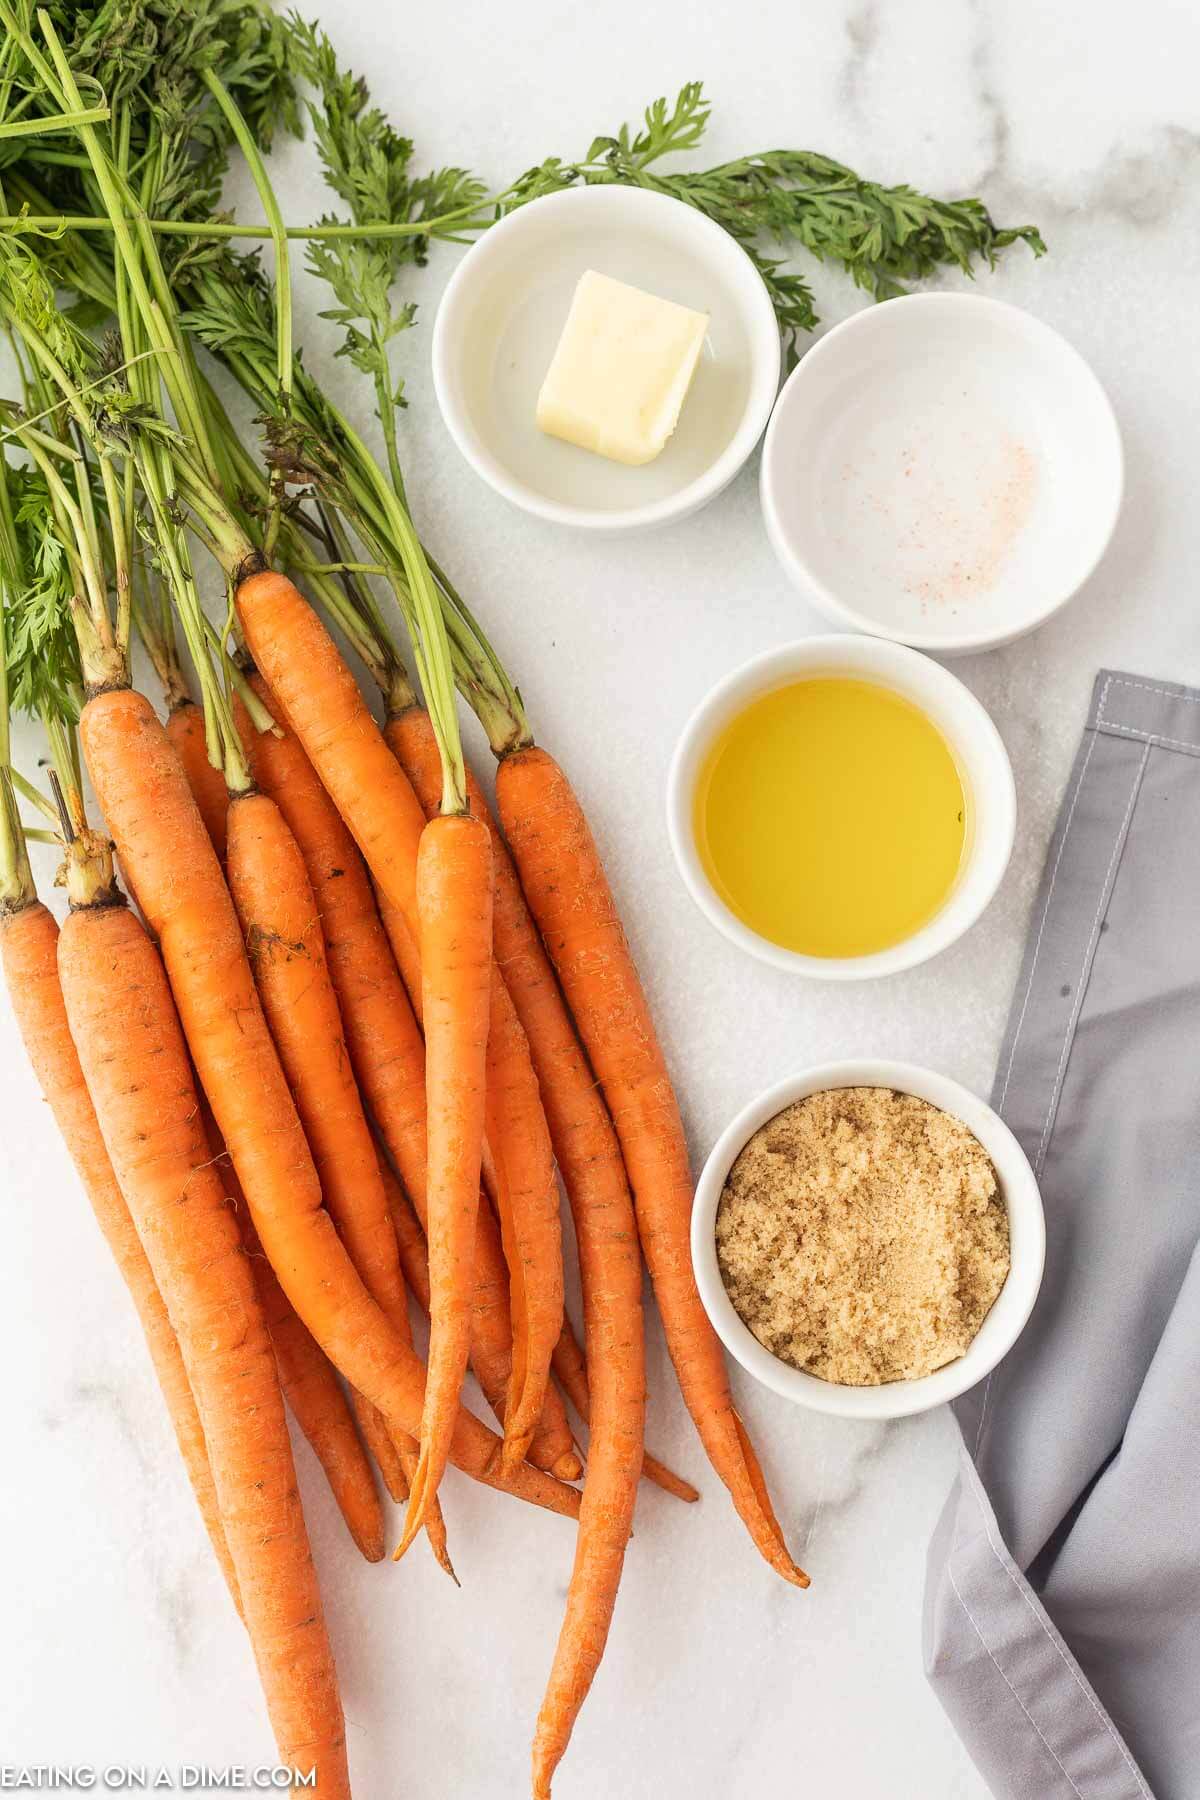 Ingredients for Grilled carrots - carrots, brown sugar, butter, oil, salt